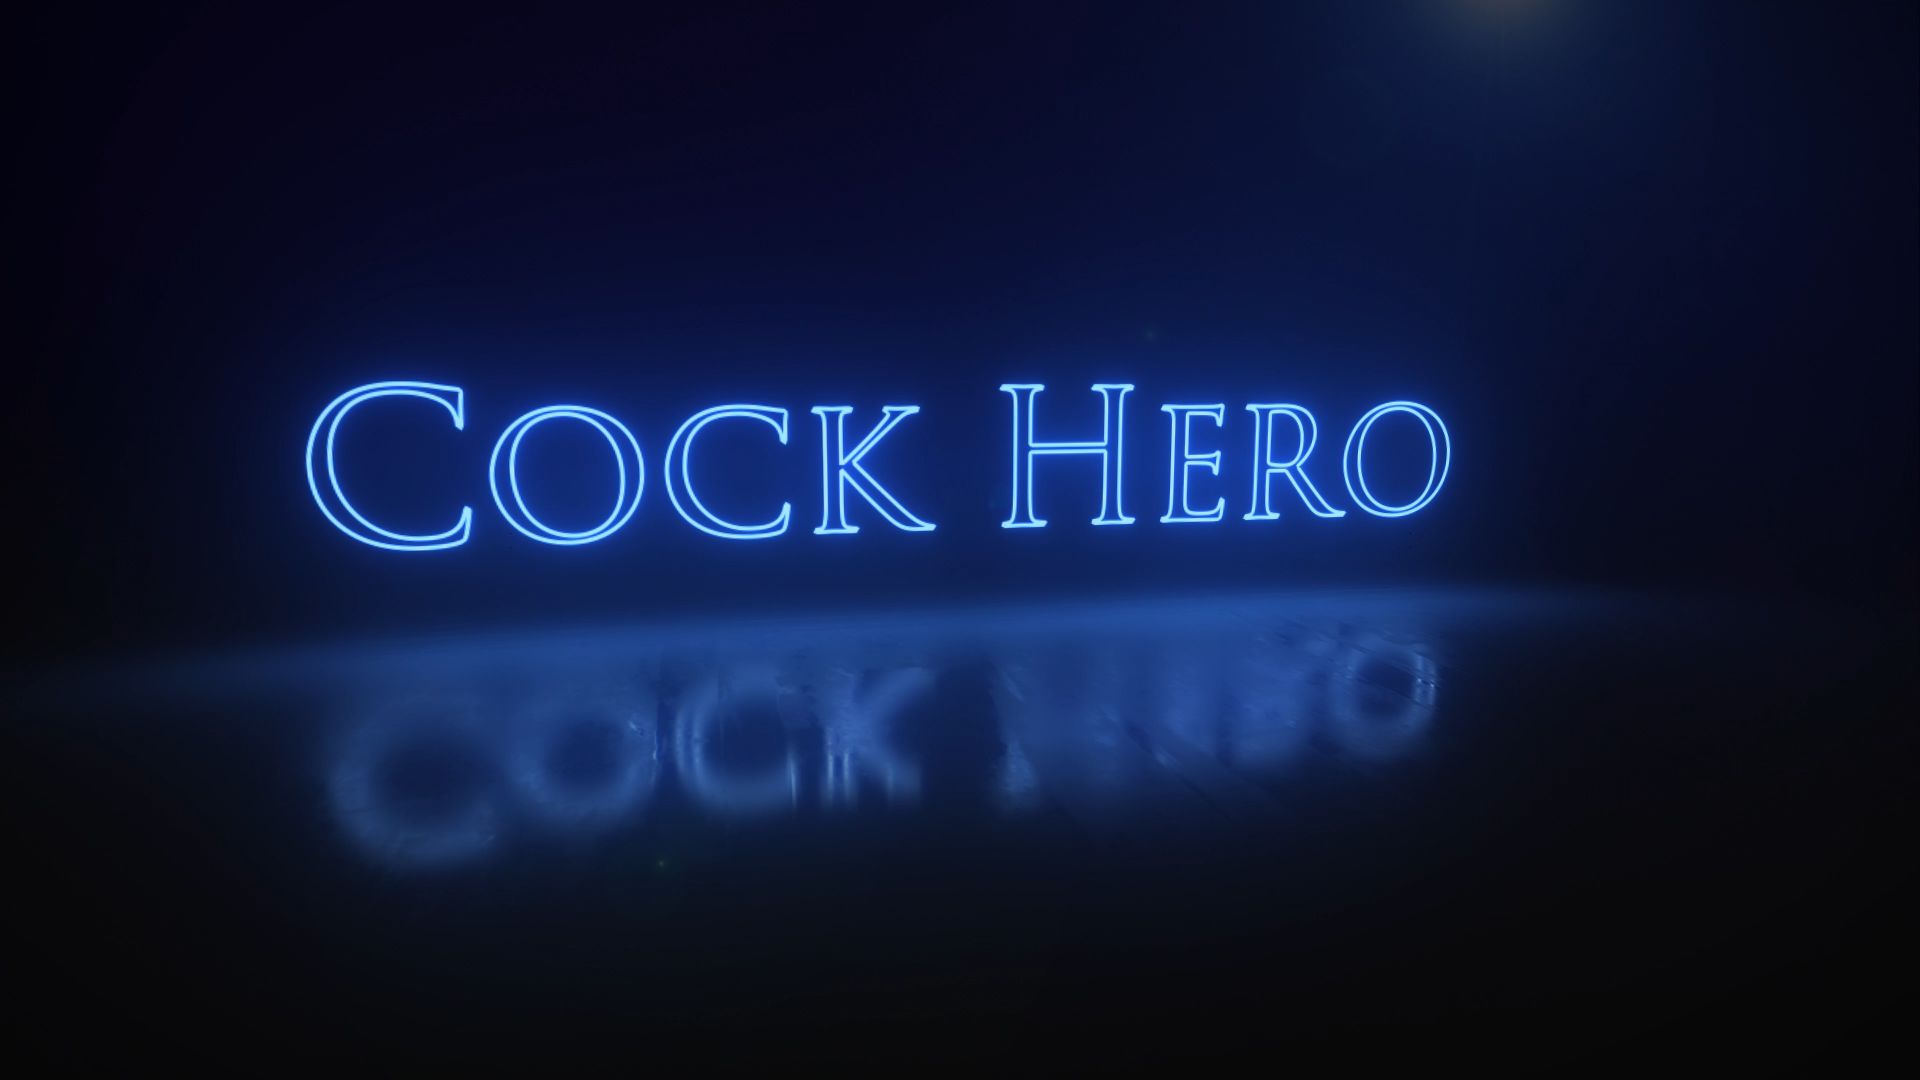 Cock hero last